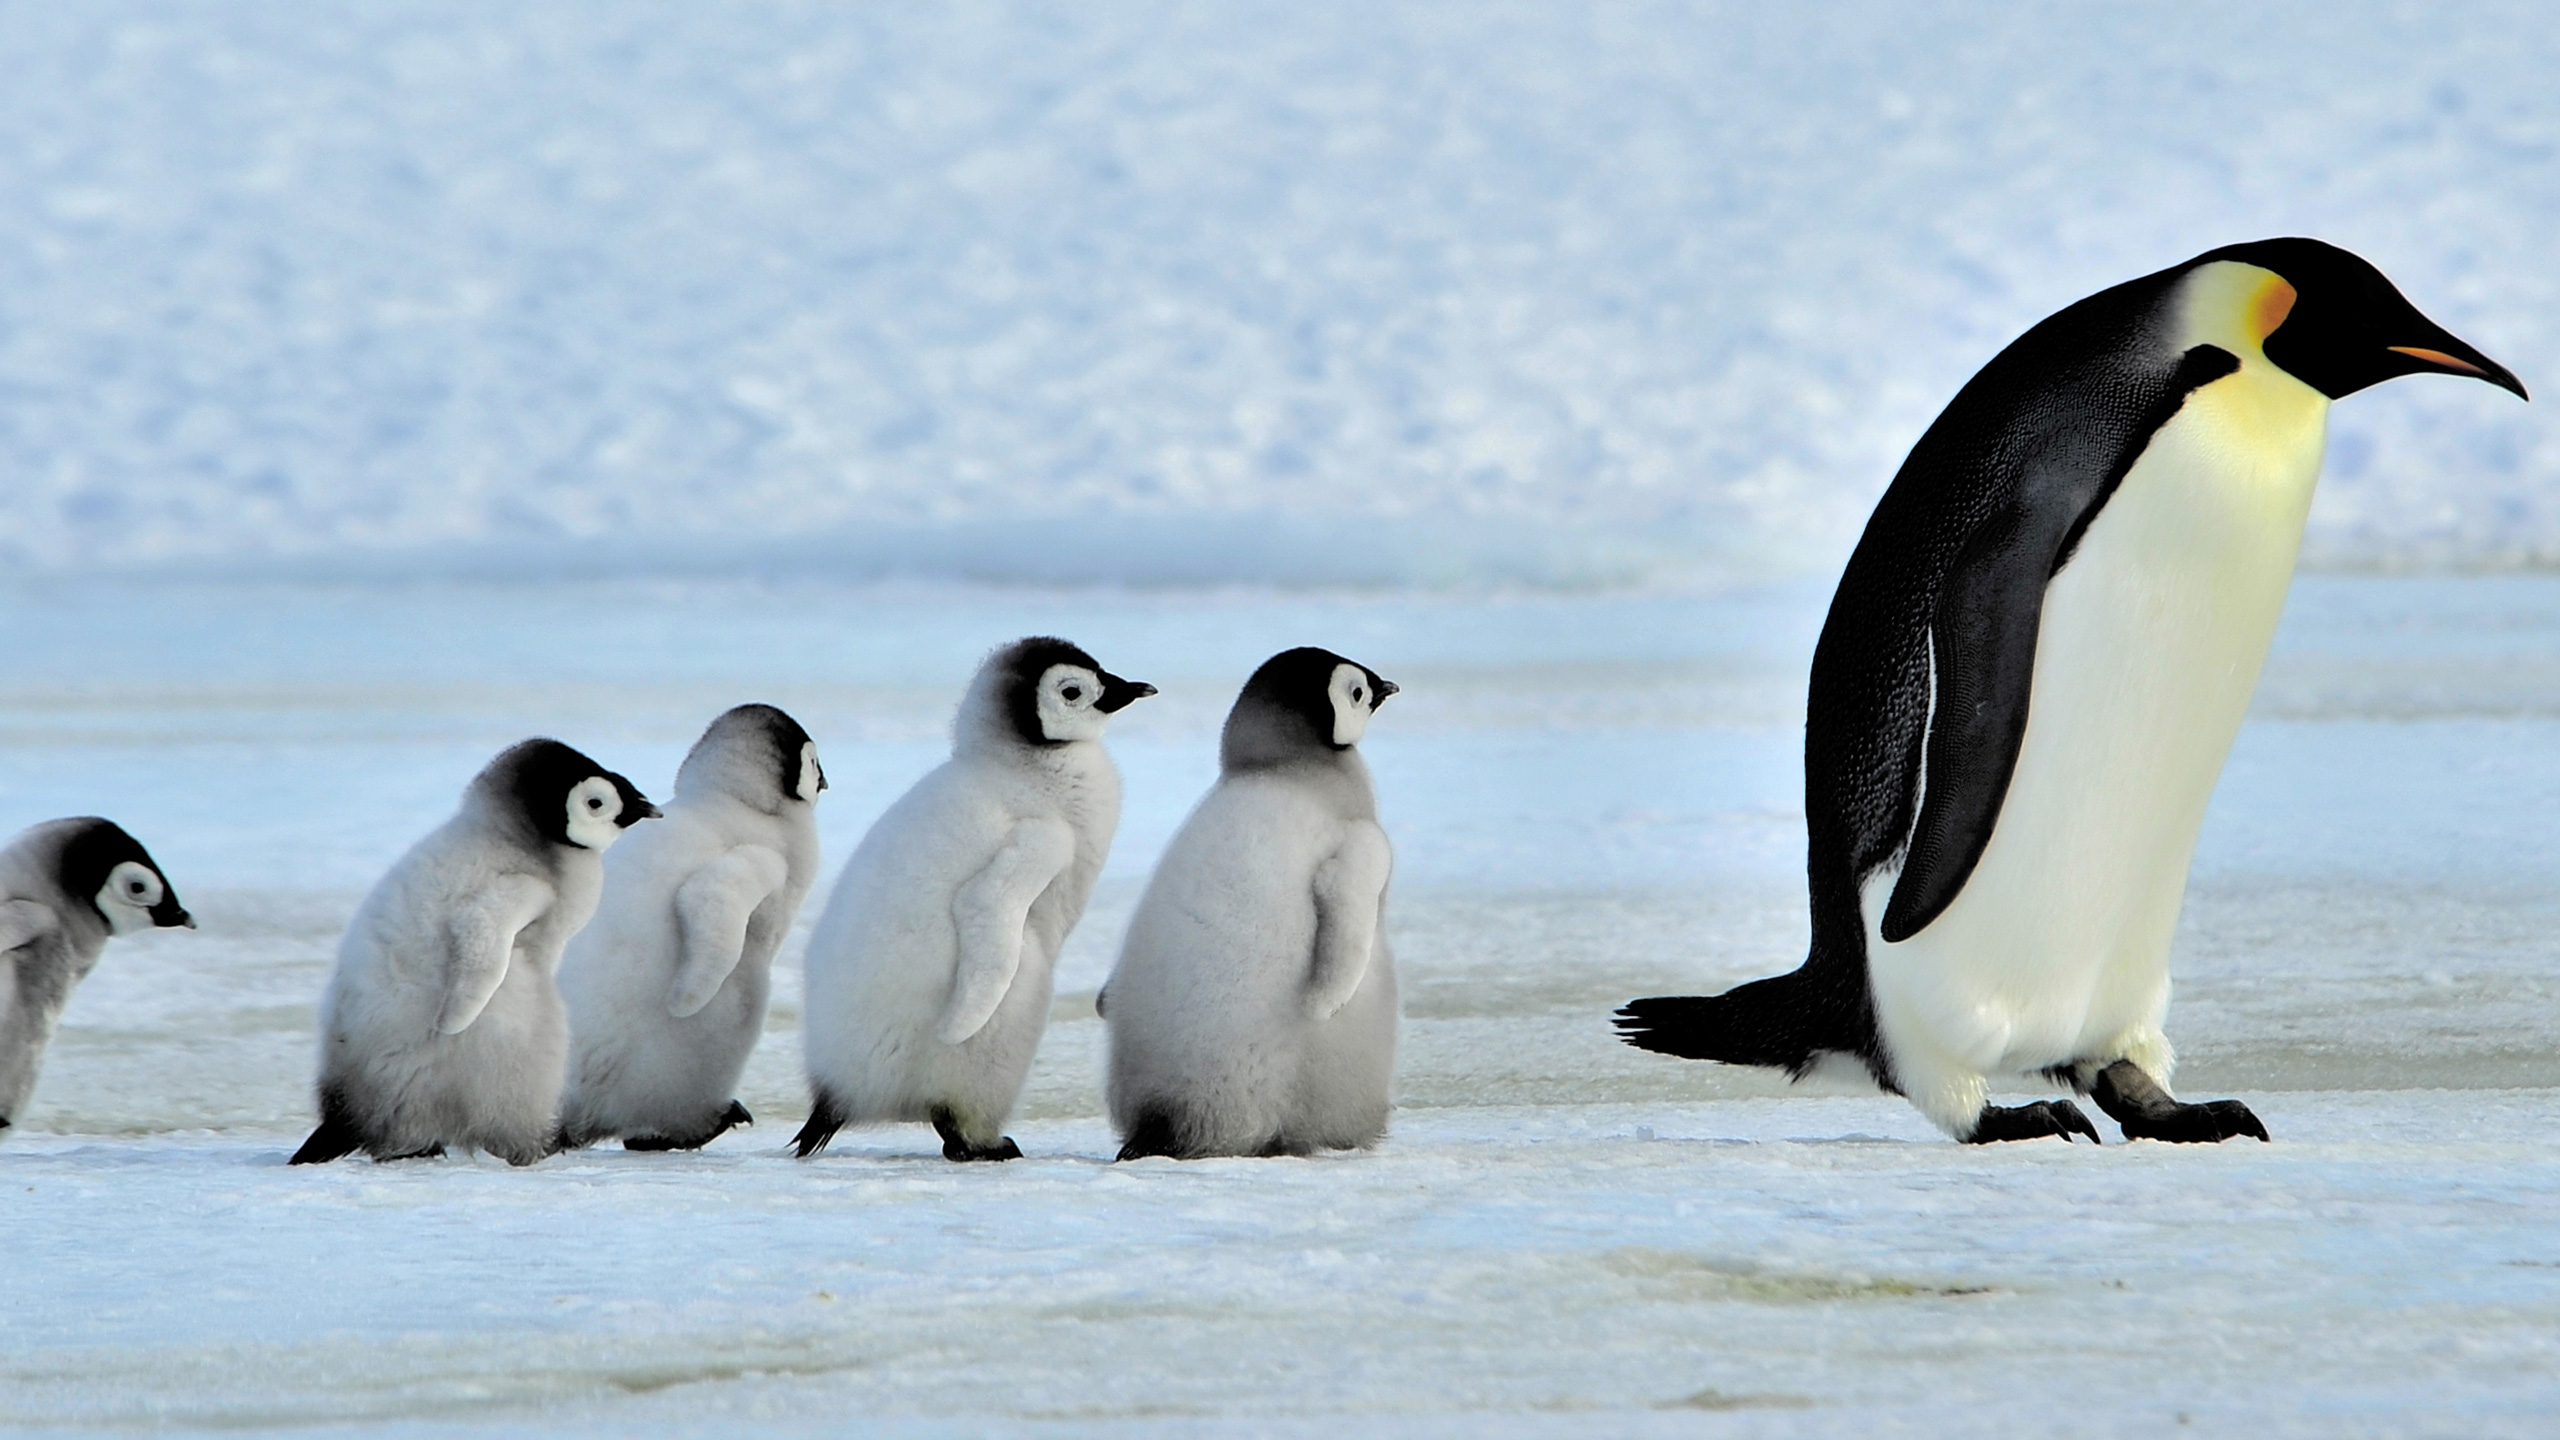 Do penguins migrate?